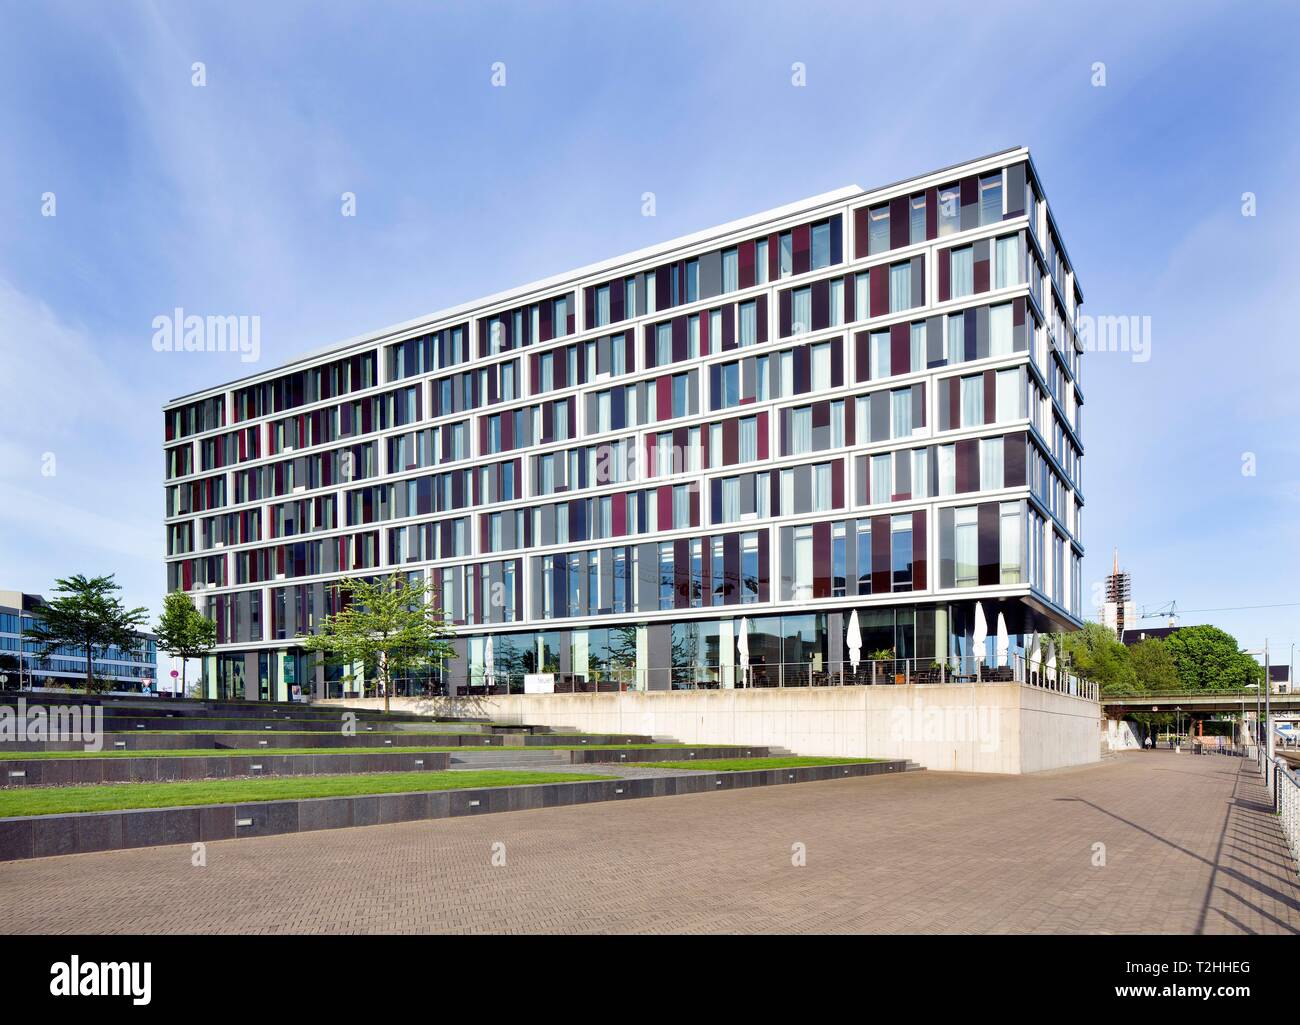 Hotel Steigenberger in the Weser Quarter, Bremen, Germany Stock Photo